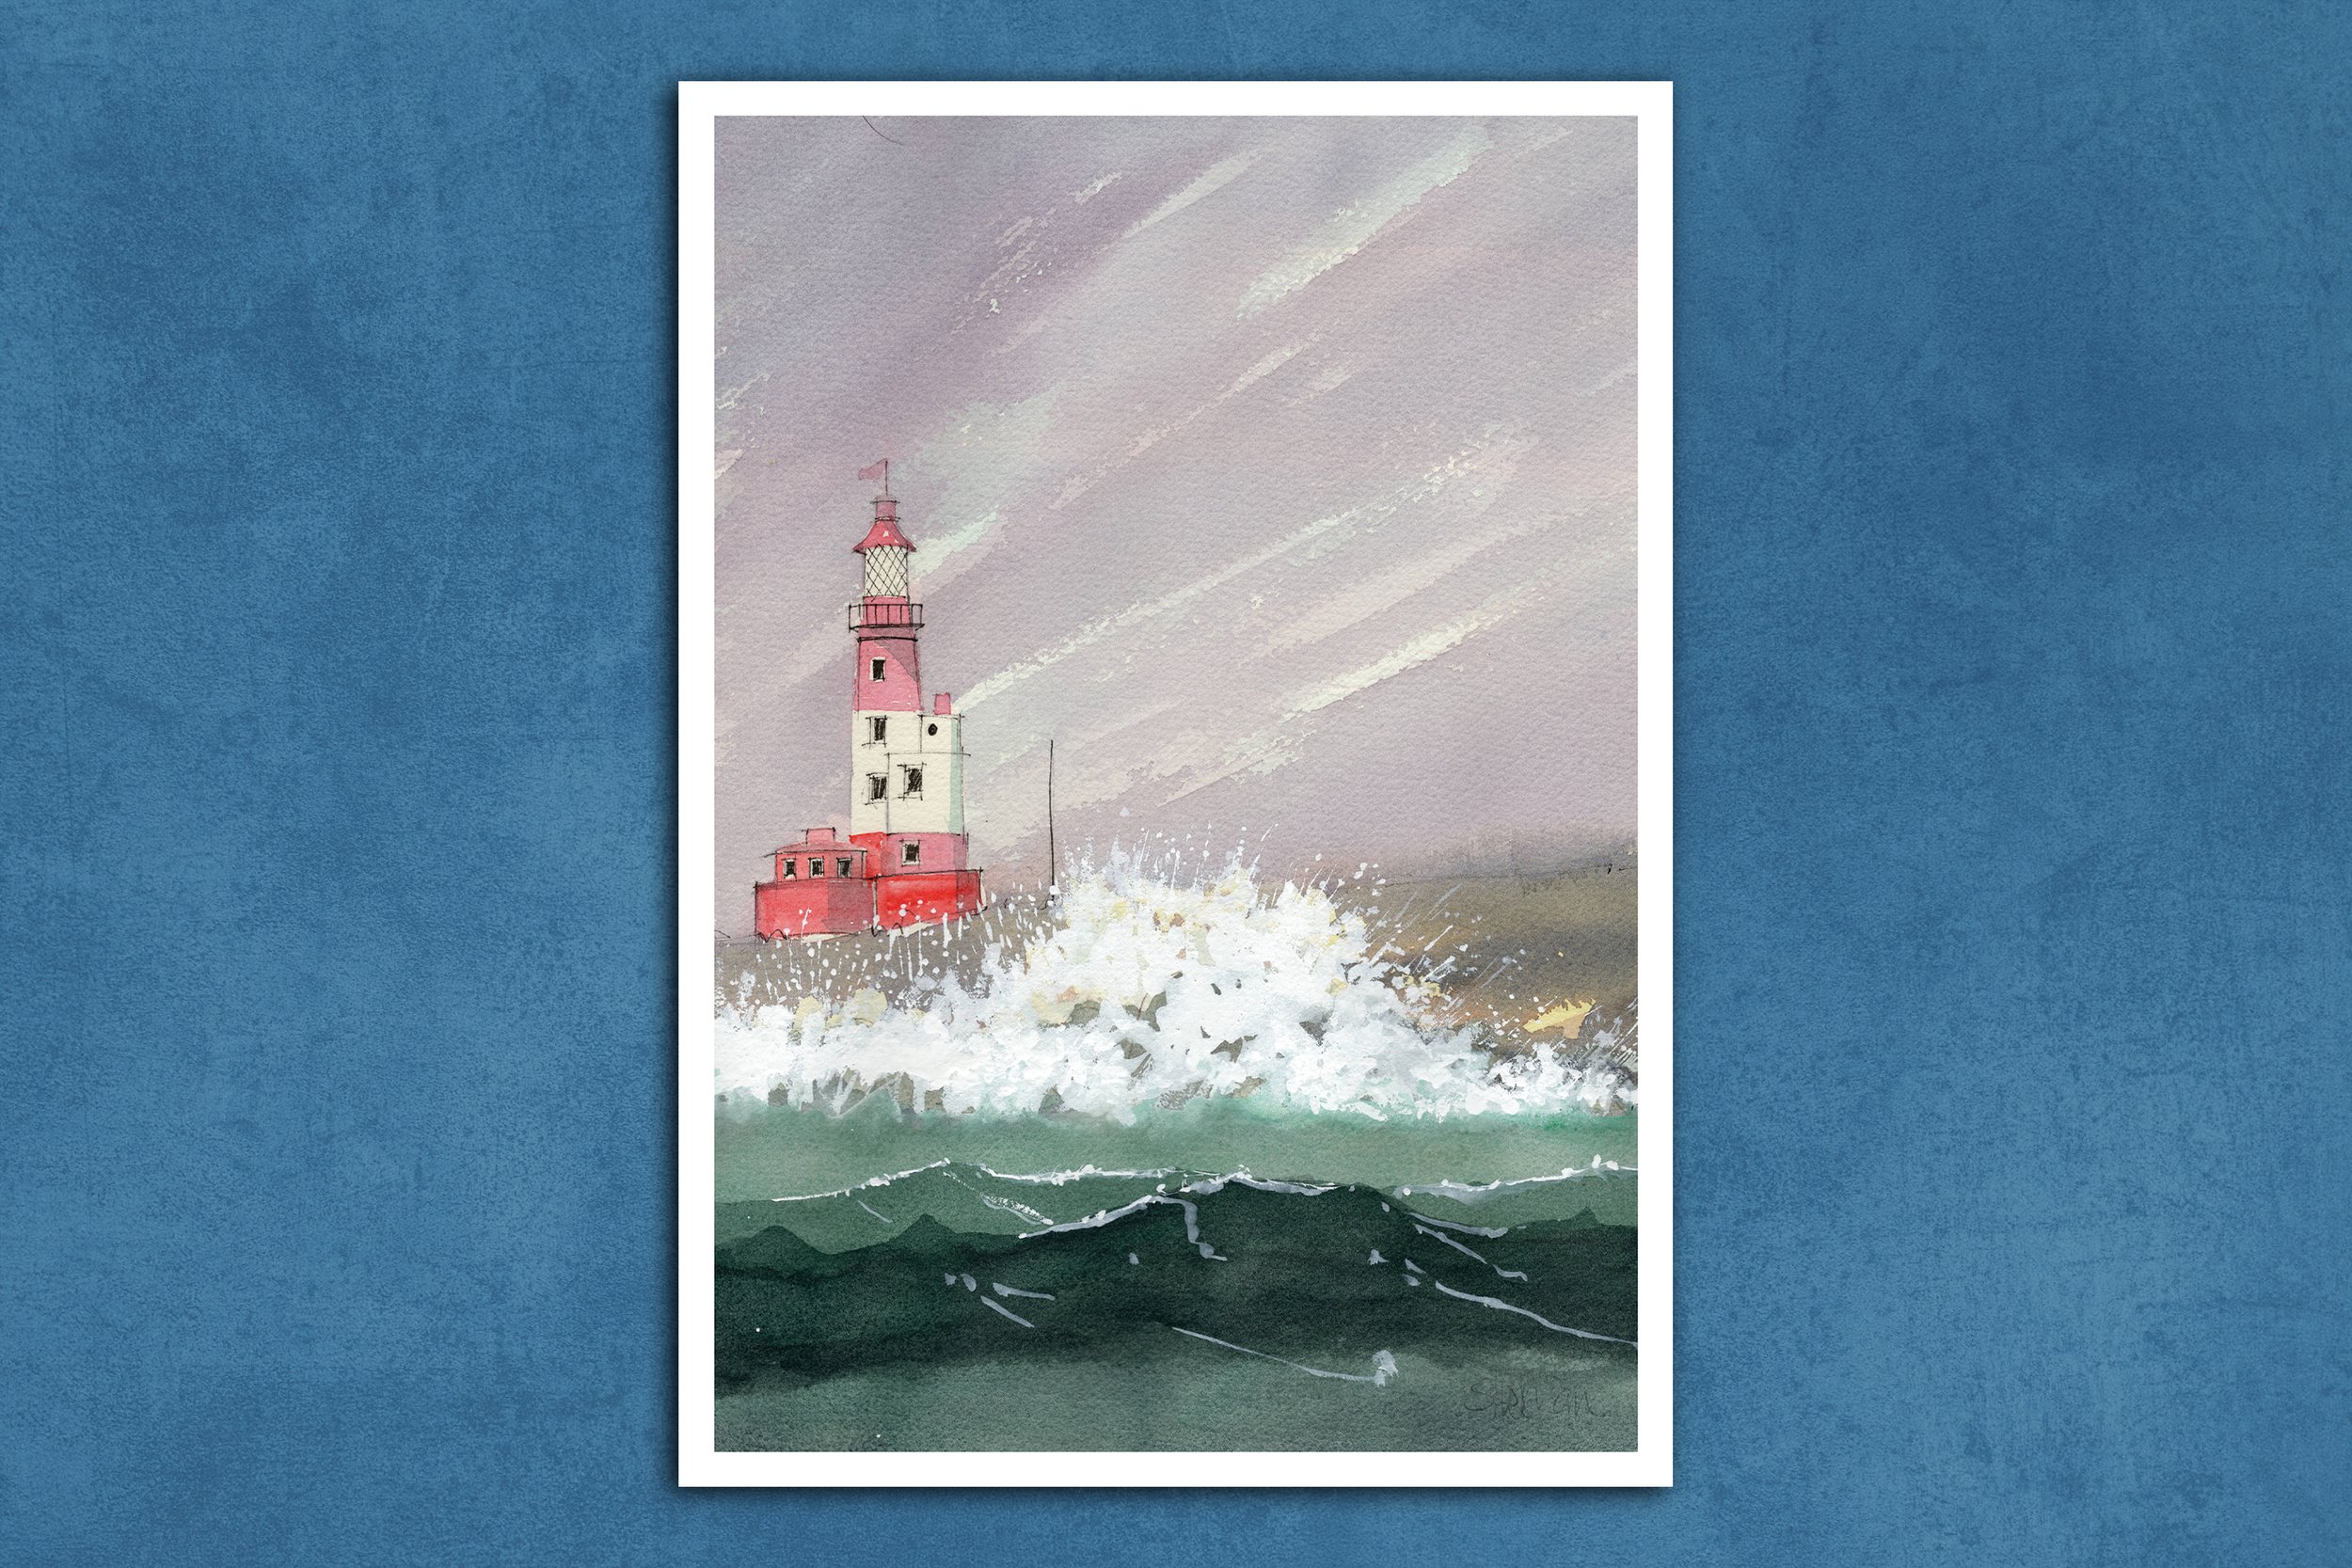 Madeinbradfordonavon-Anthony Sheeran-Lighthouse in Stormy Seas.jpg